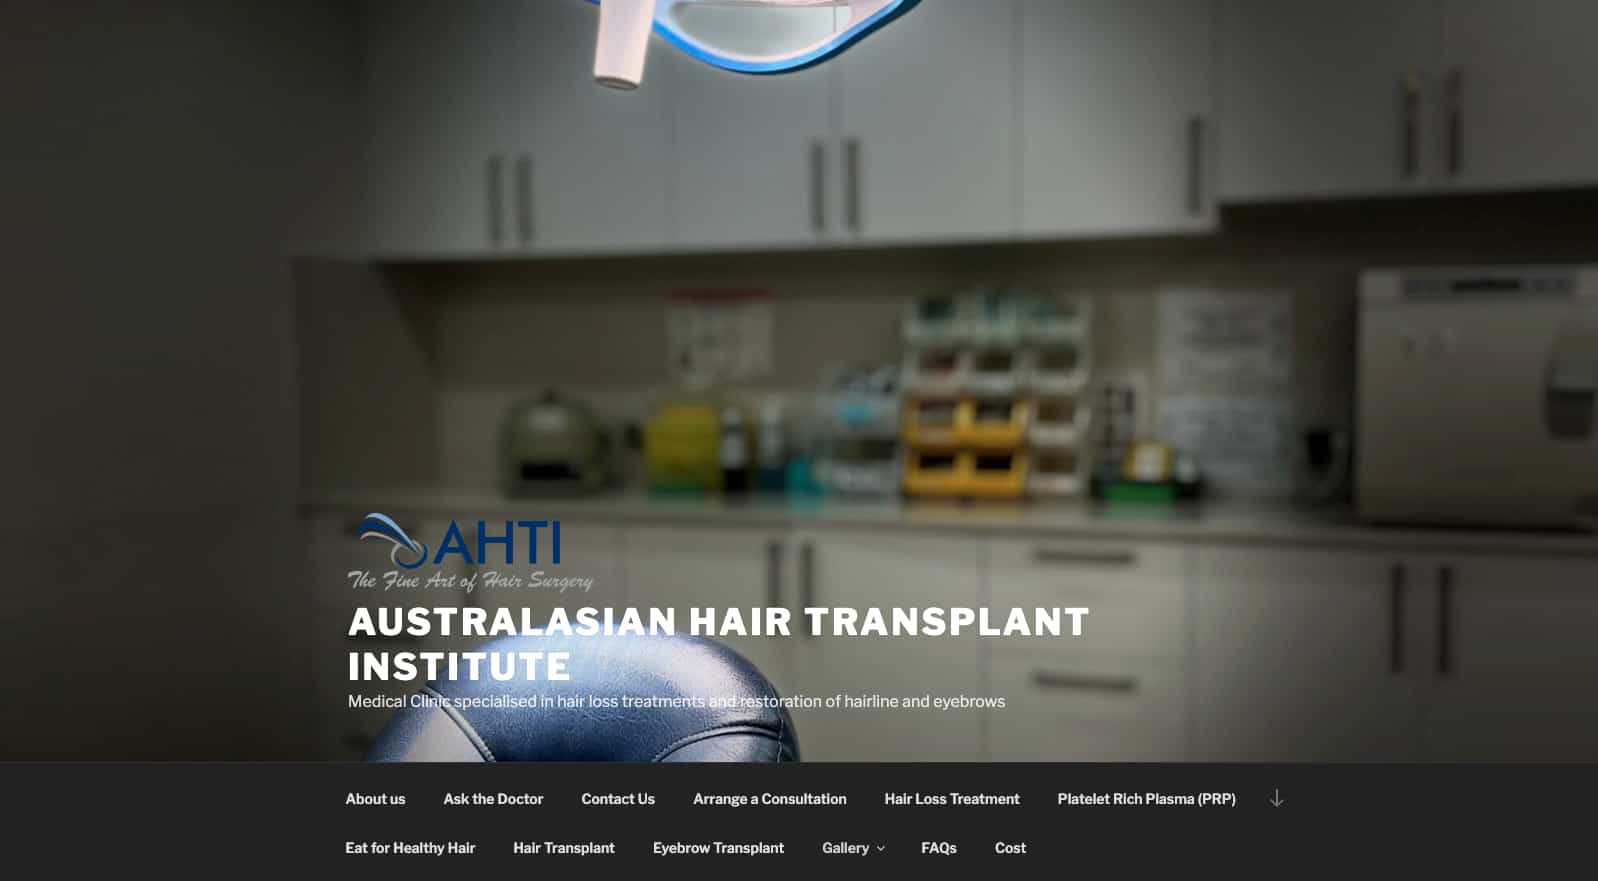 Australasian Hair Transplant Institute